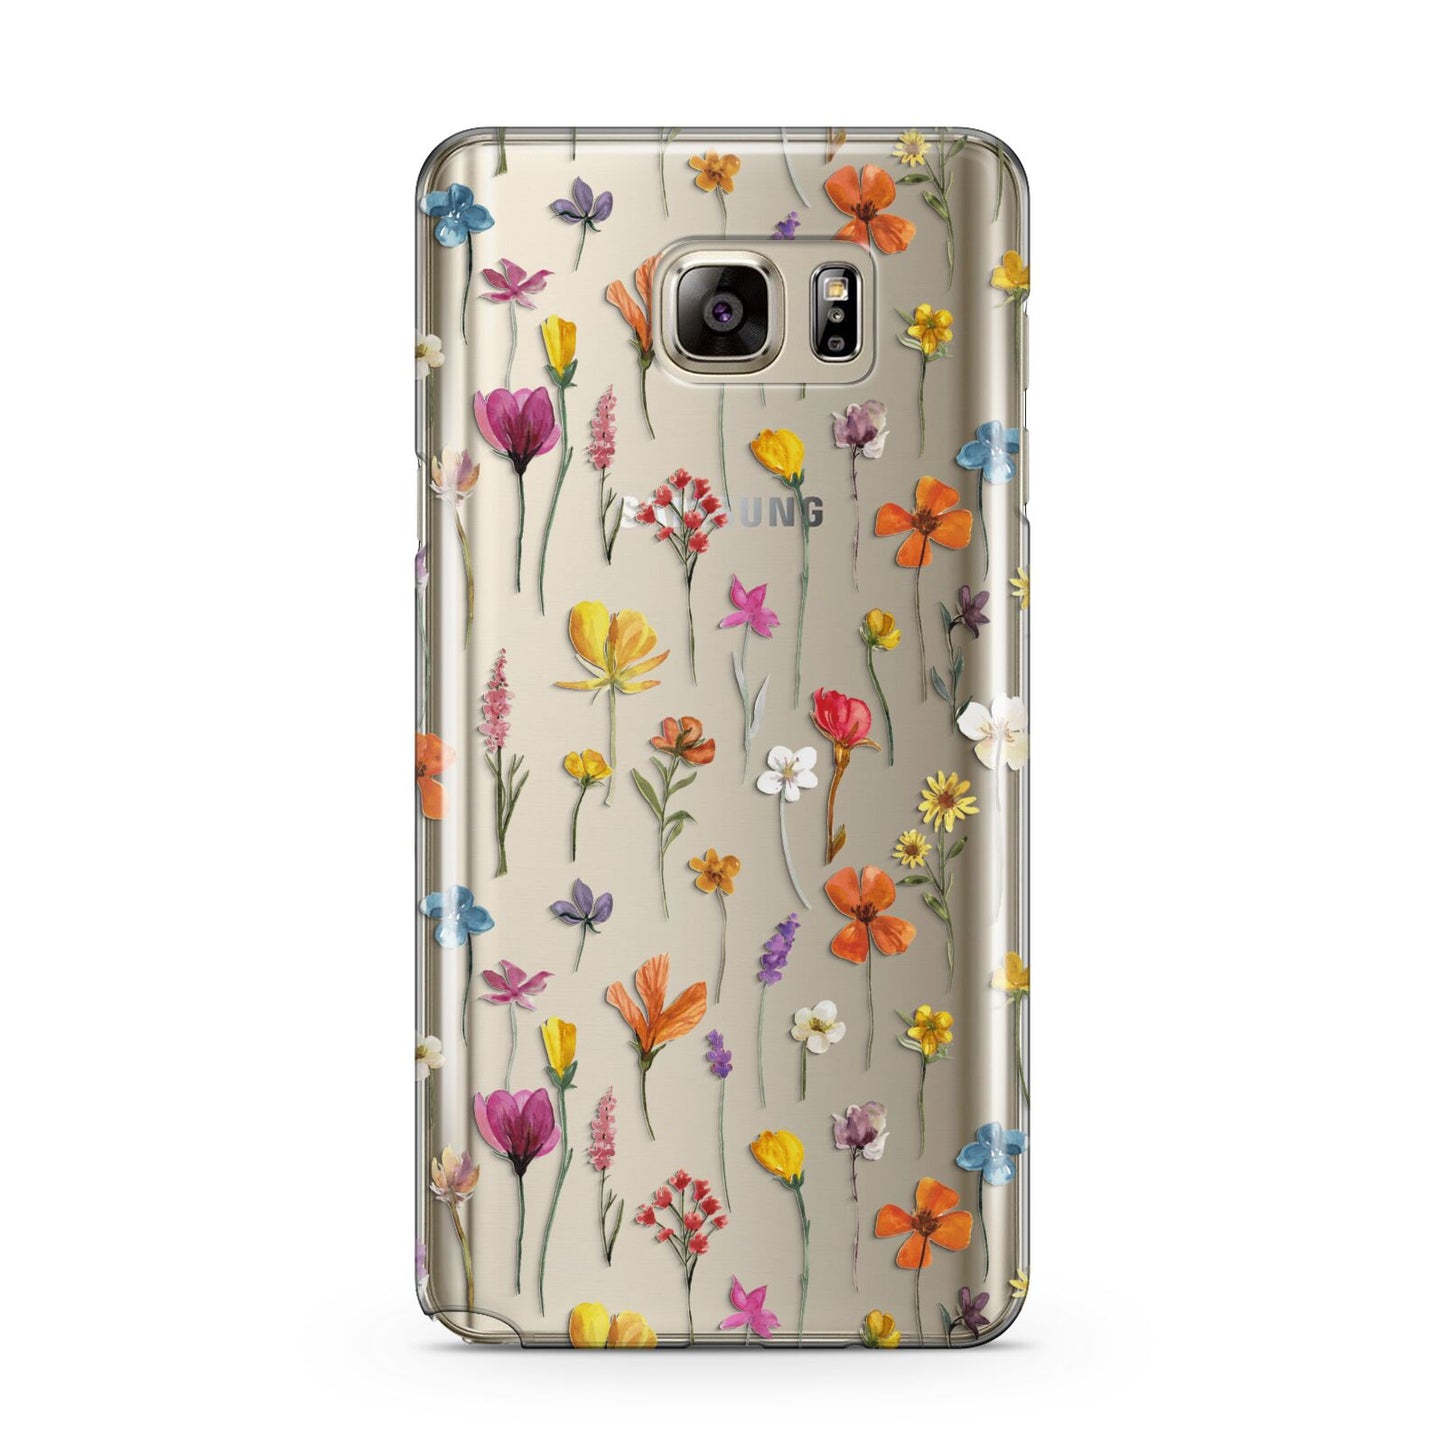 Botanical Floral Samsung Galaxy Note 5 Case